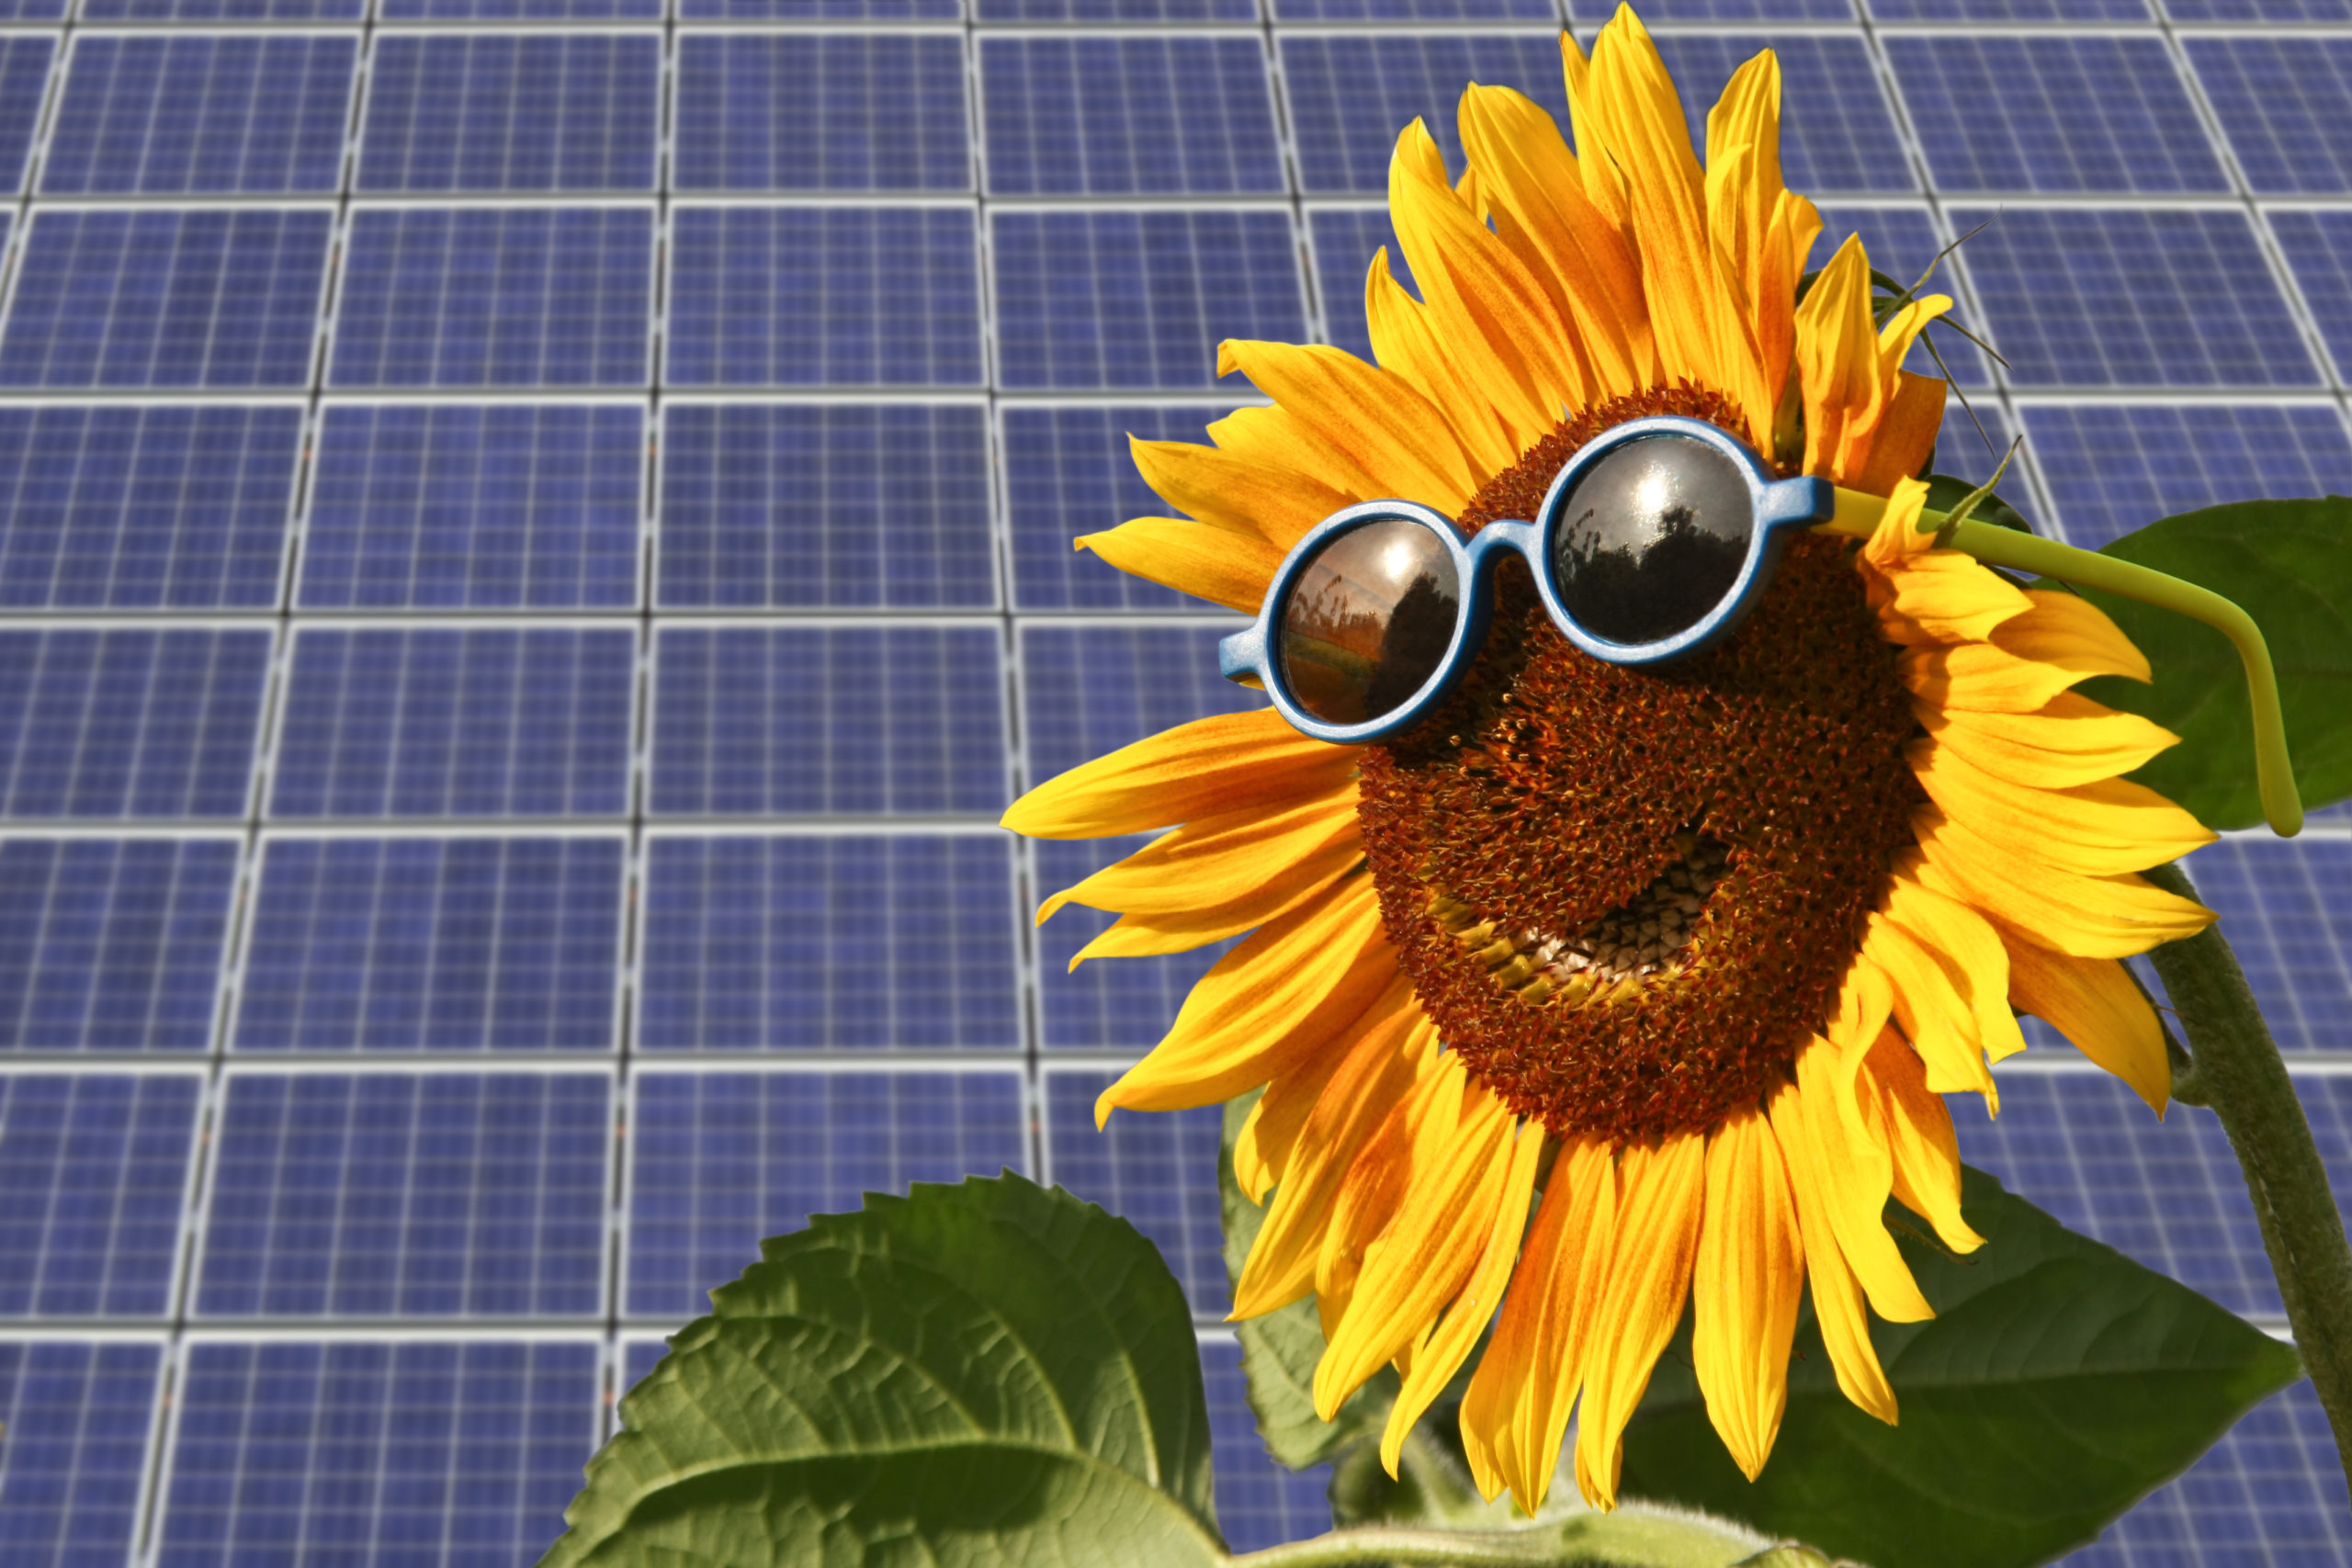 solar sunflower 